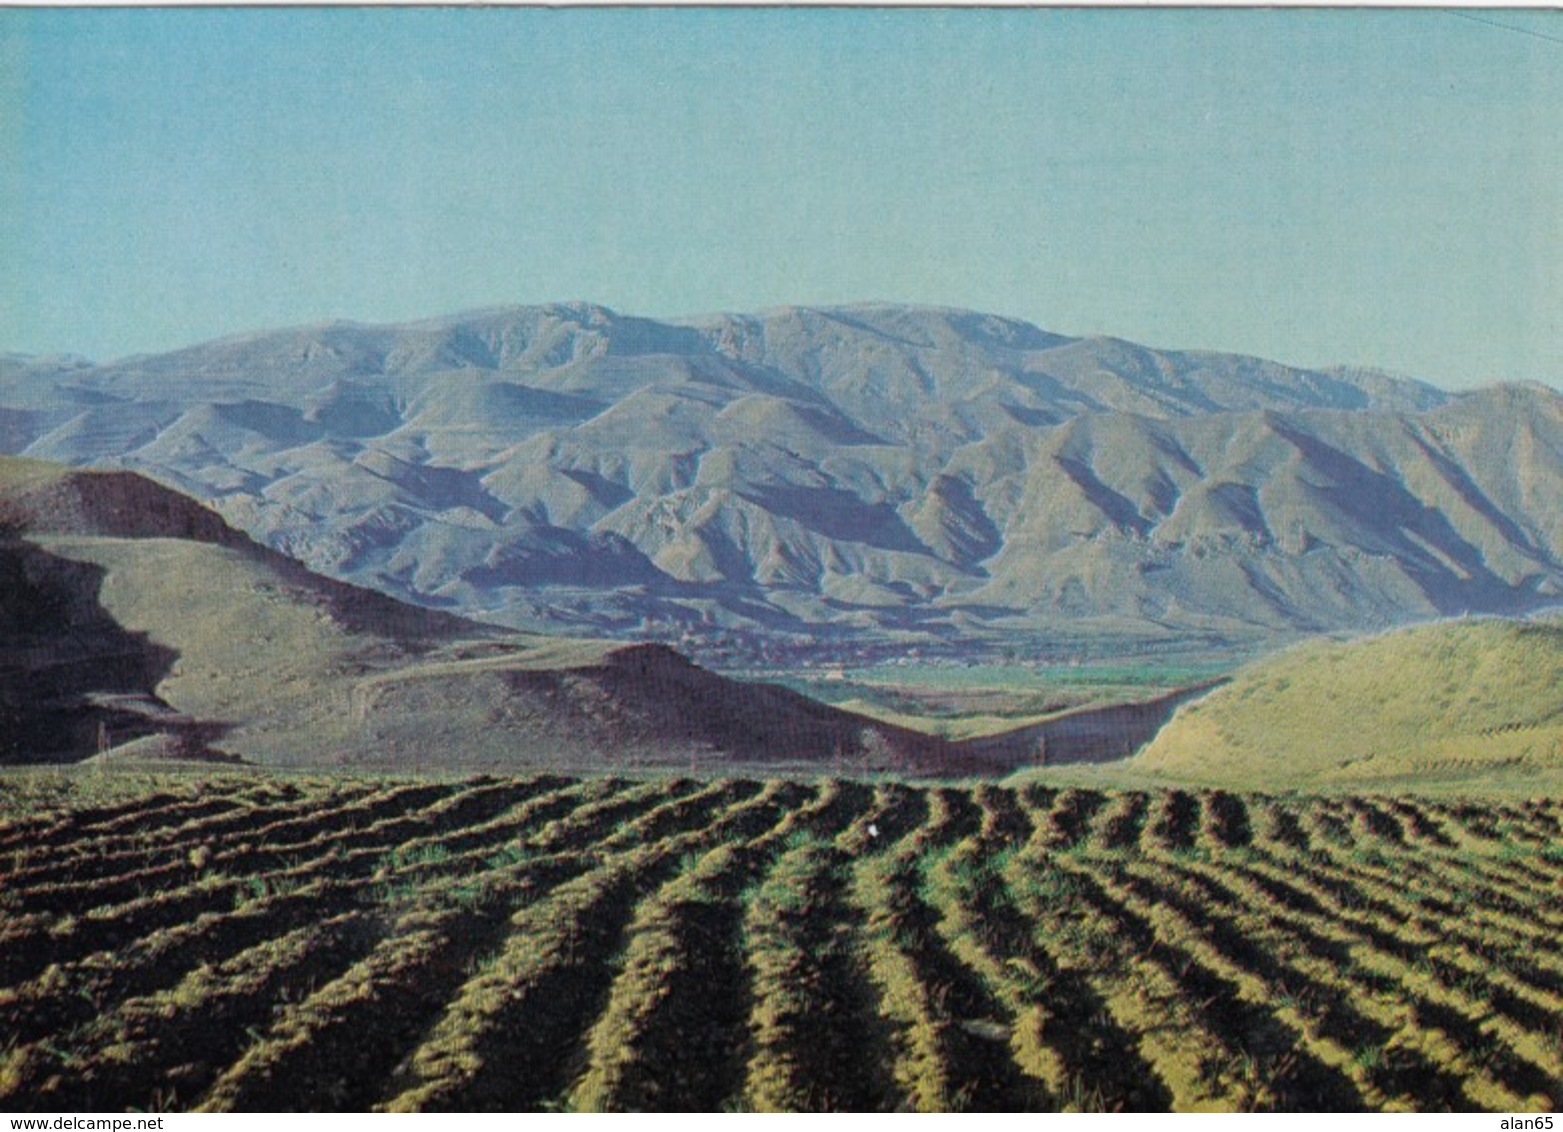 Armenia, Mountain Scenary, Some Type Of Agriculture(?), Soviet-era Issued C1970s Vintage Postcard - Armenia